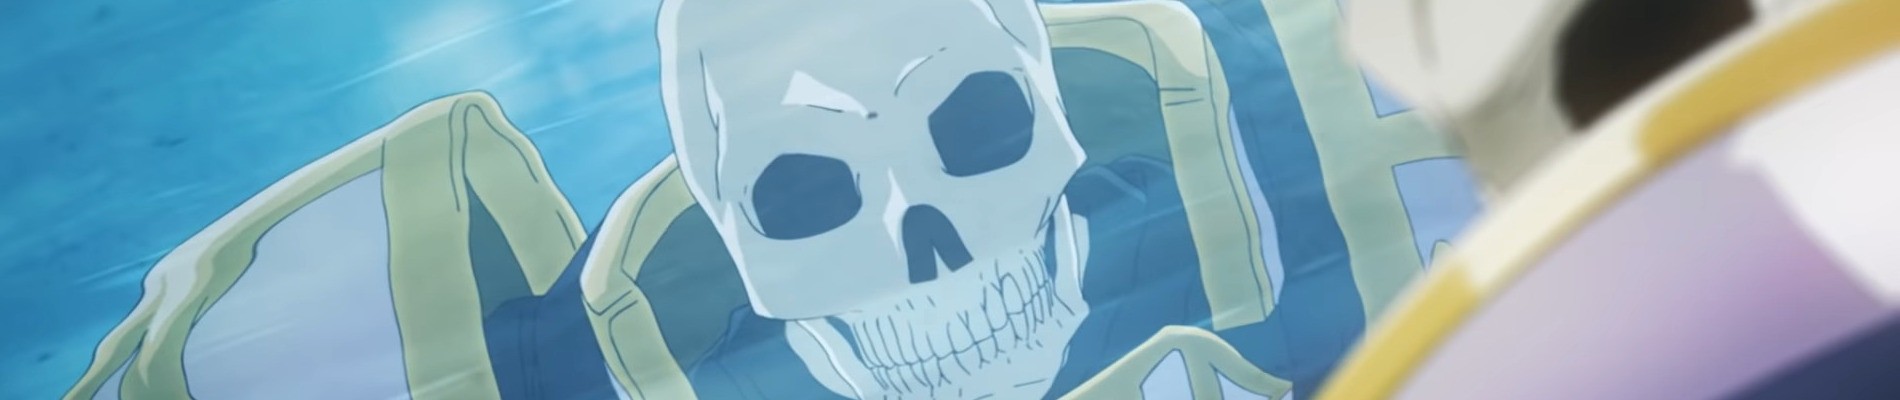 Skeleton Knight in Another World TRAILER 2 ANIME (Gaikotsu Kishi-sama,  Tadaima Isekai e Odekakechuu) 